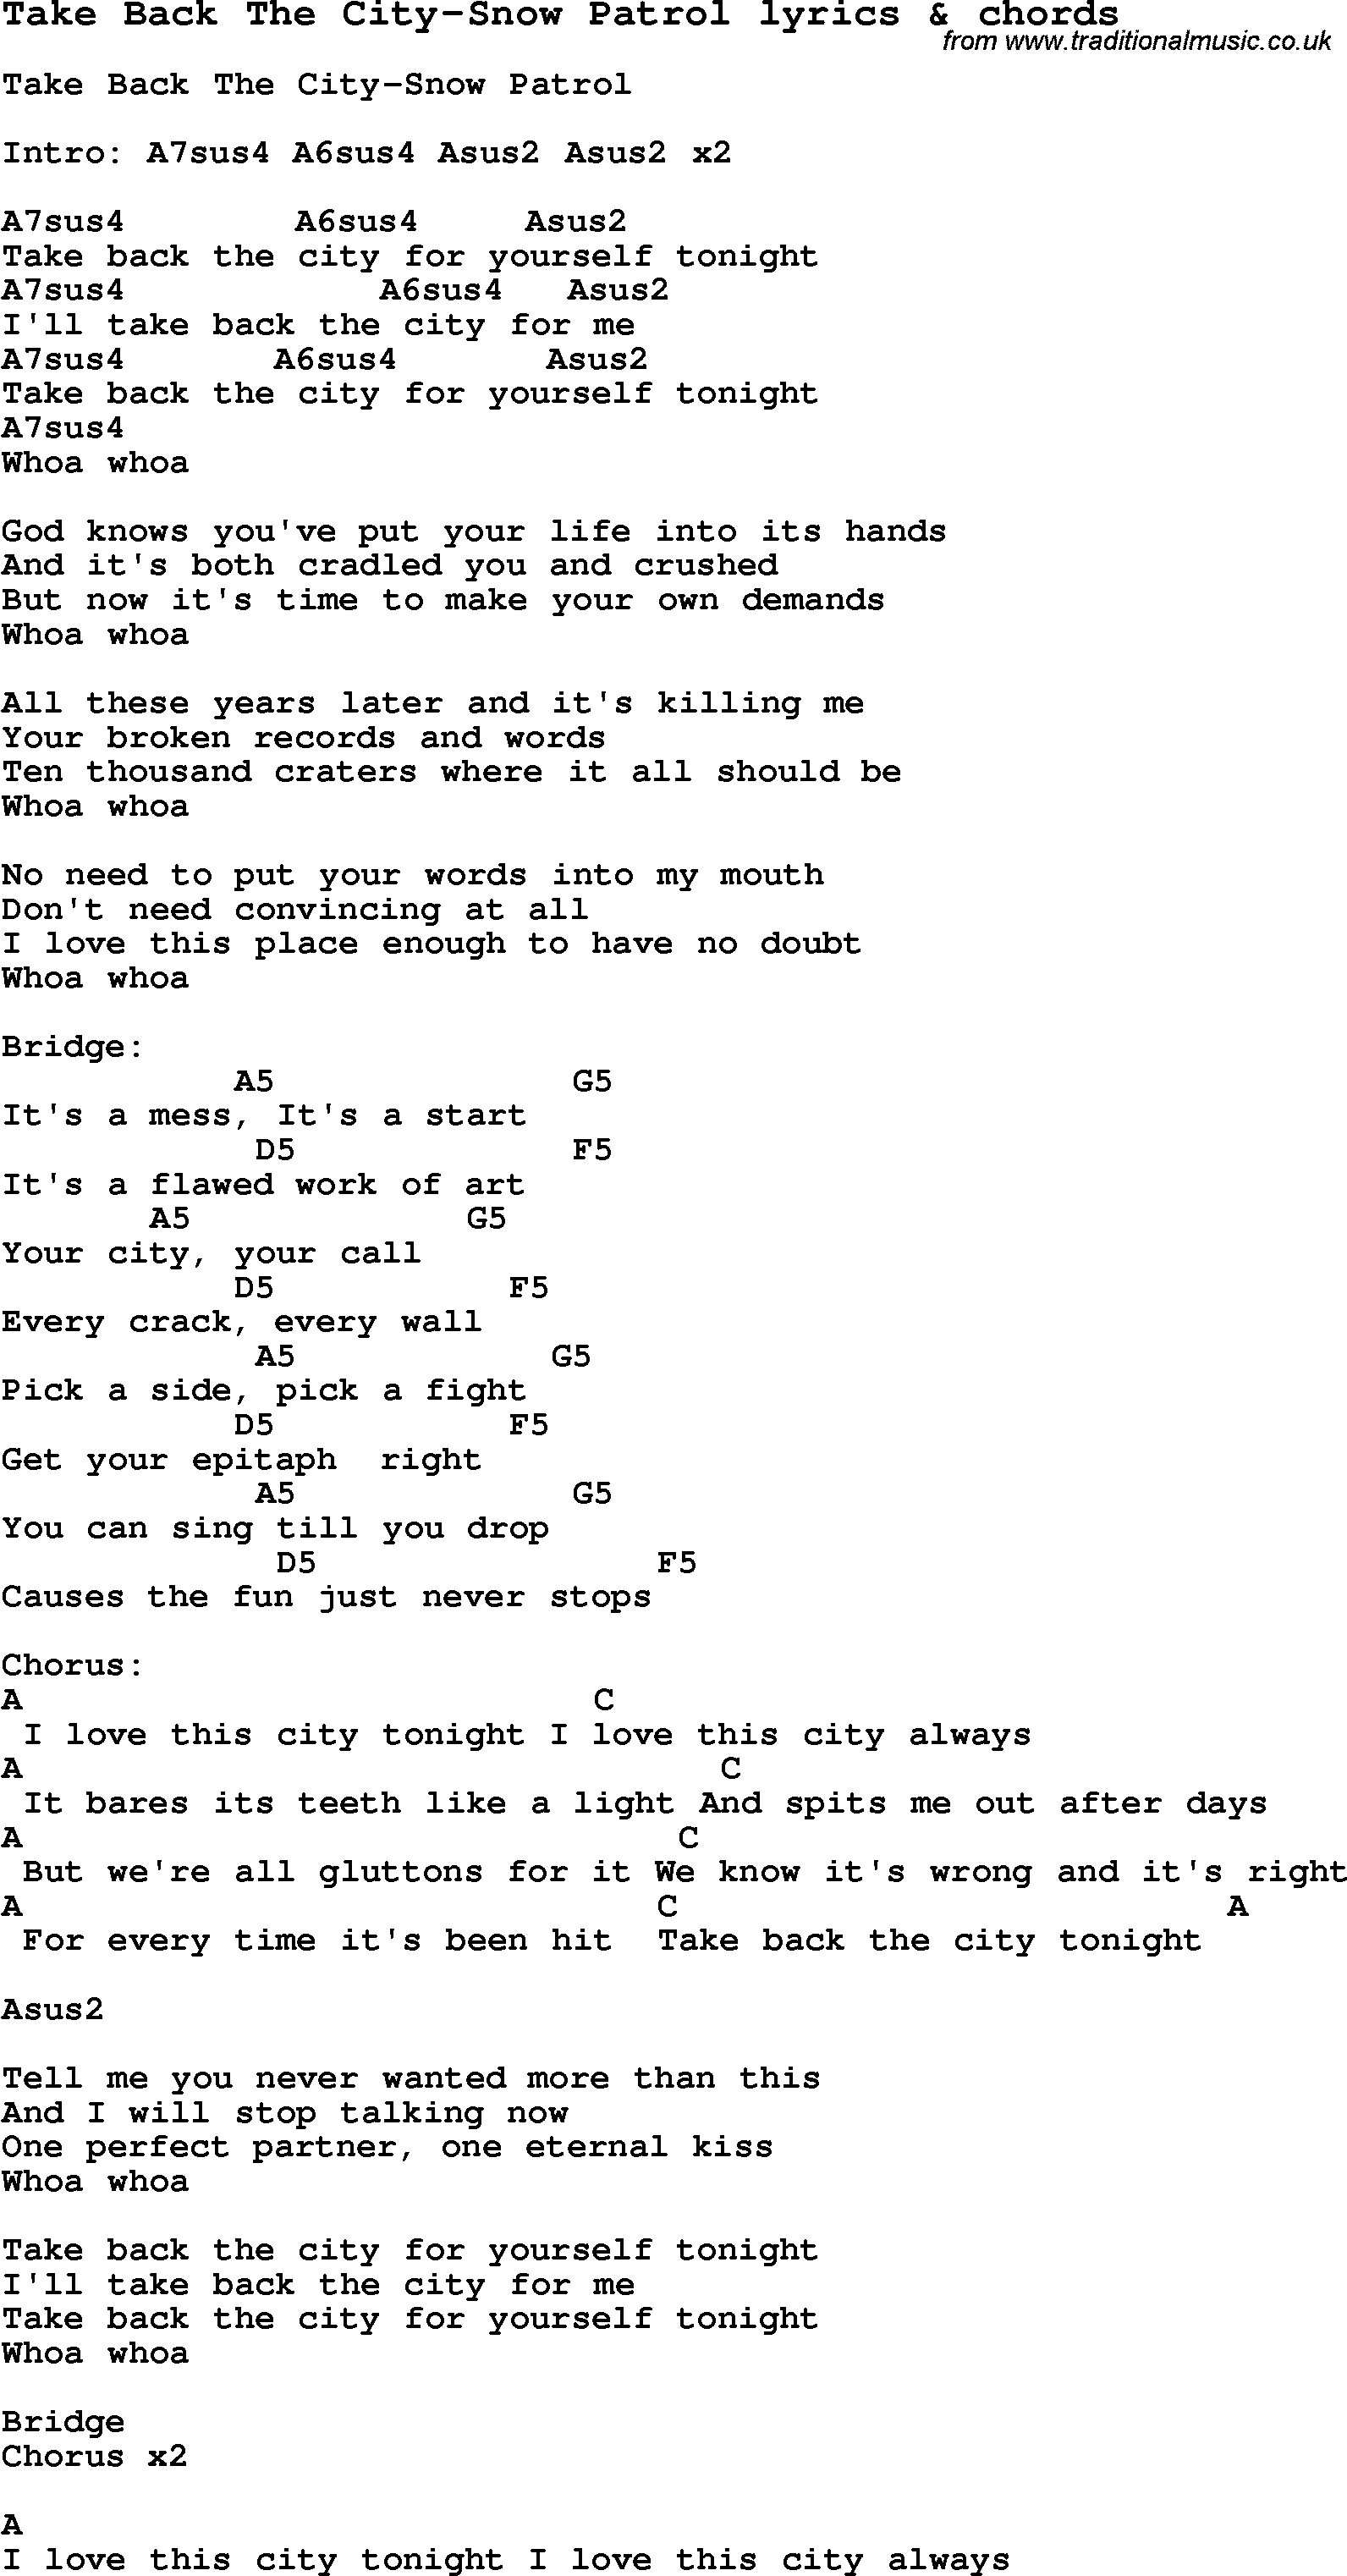 Love Song Lyrics for: Take Back The City-Snow Patrol with chords for Ukulele, Guitar Banjo etc.